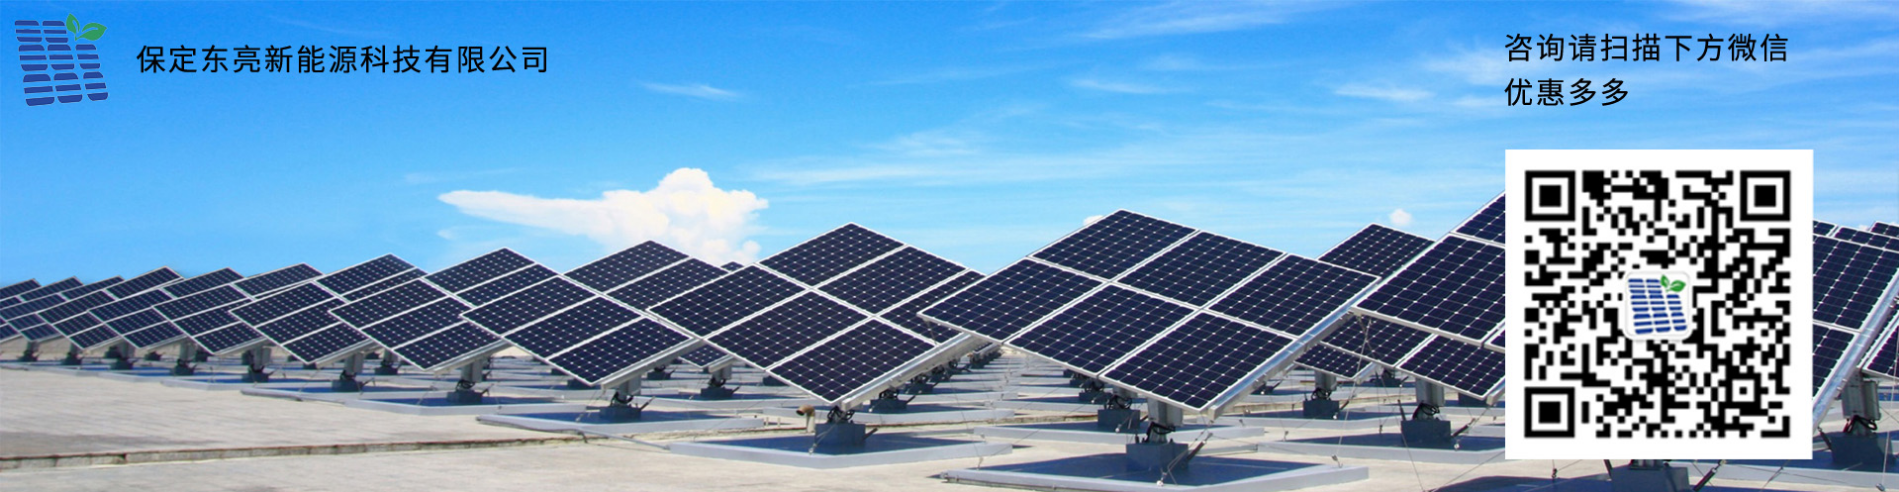 90w polycrystalline photovoltaic panel solar panel roof power generation system solar panel road lighting